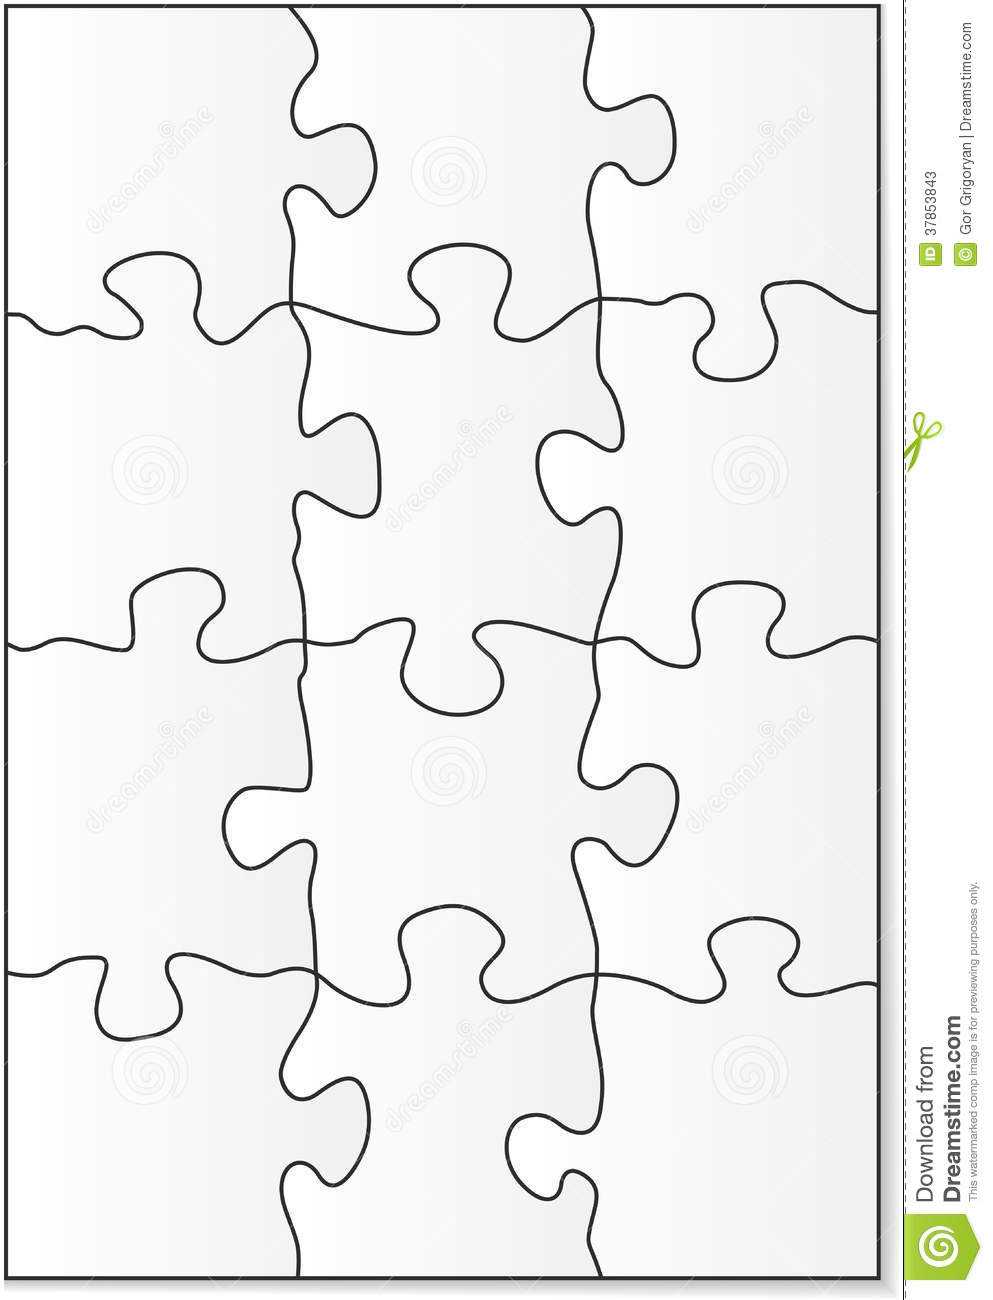 12 Piece Puzzle Template Stock Vector. Illustration Of Regarding Blank Pattern Block Templates